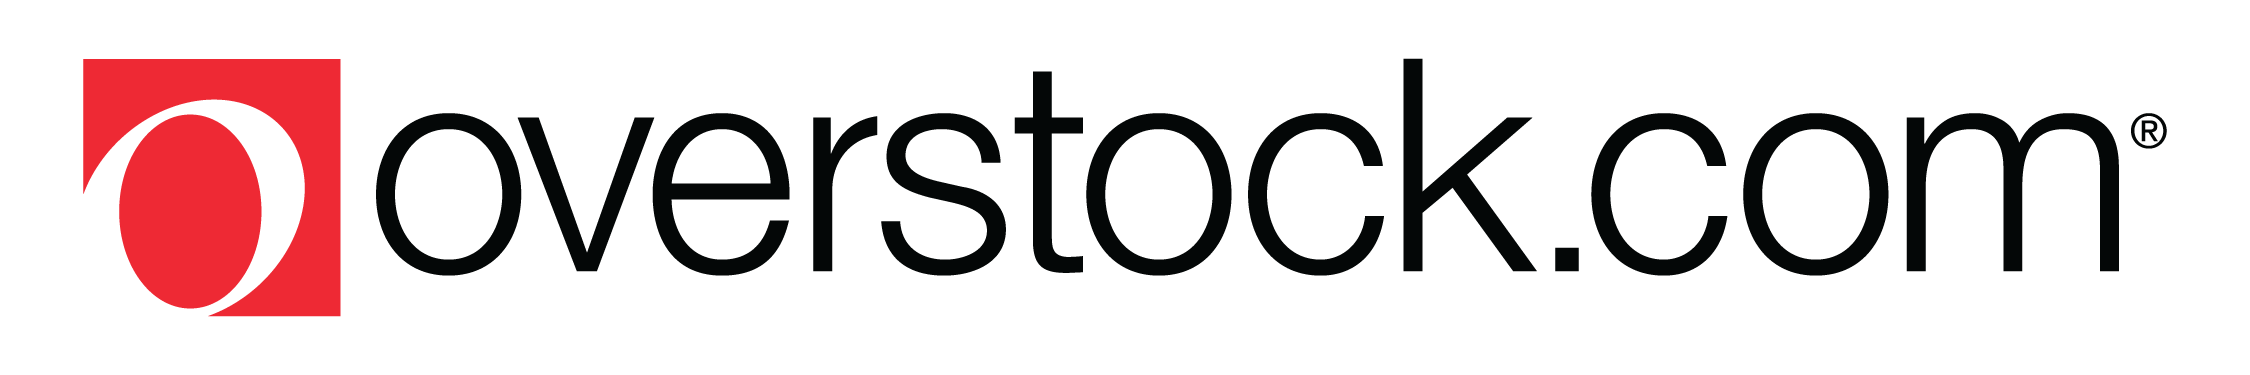 Overstock Logo - Press Release